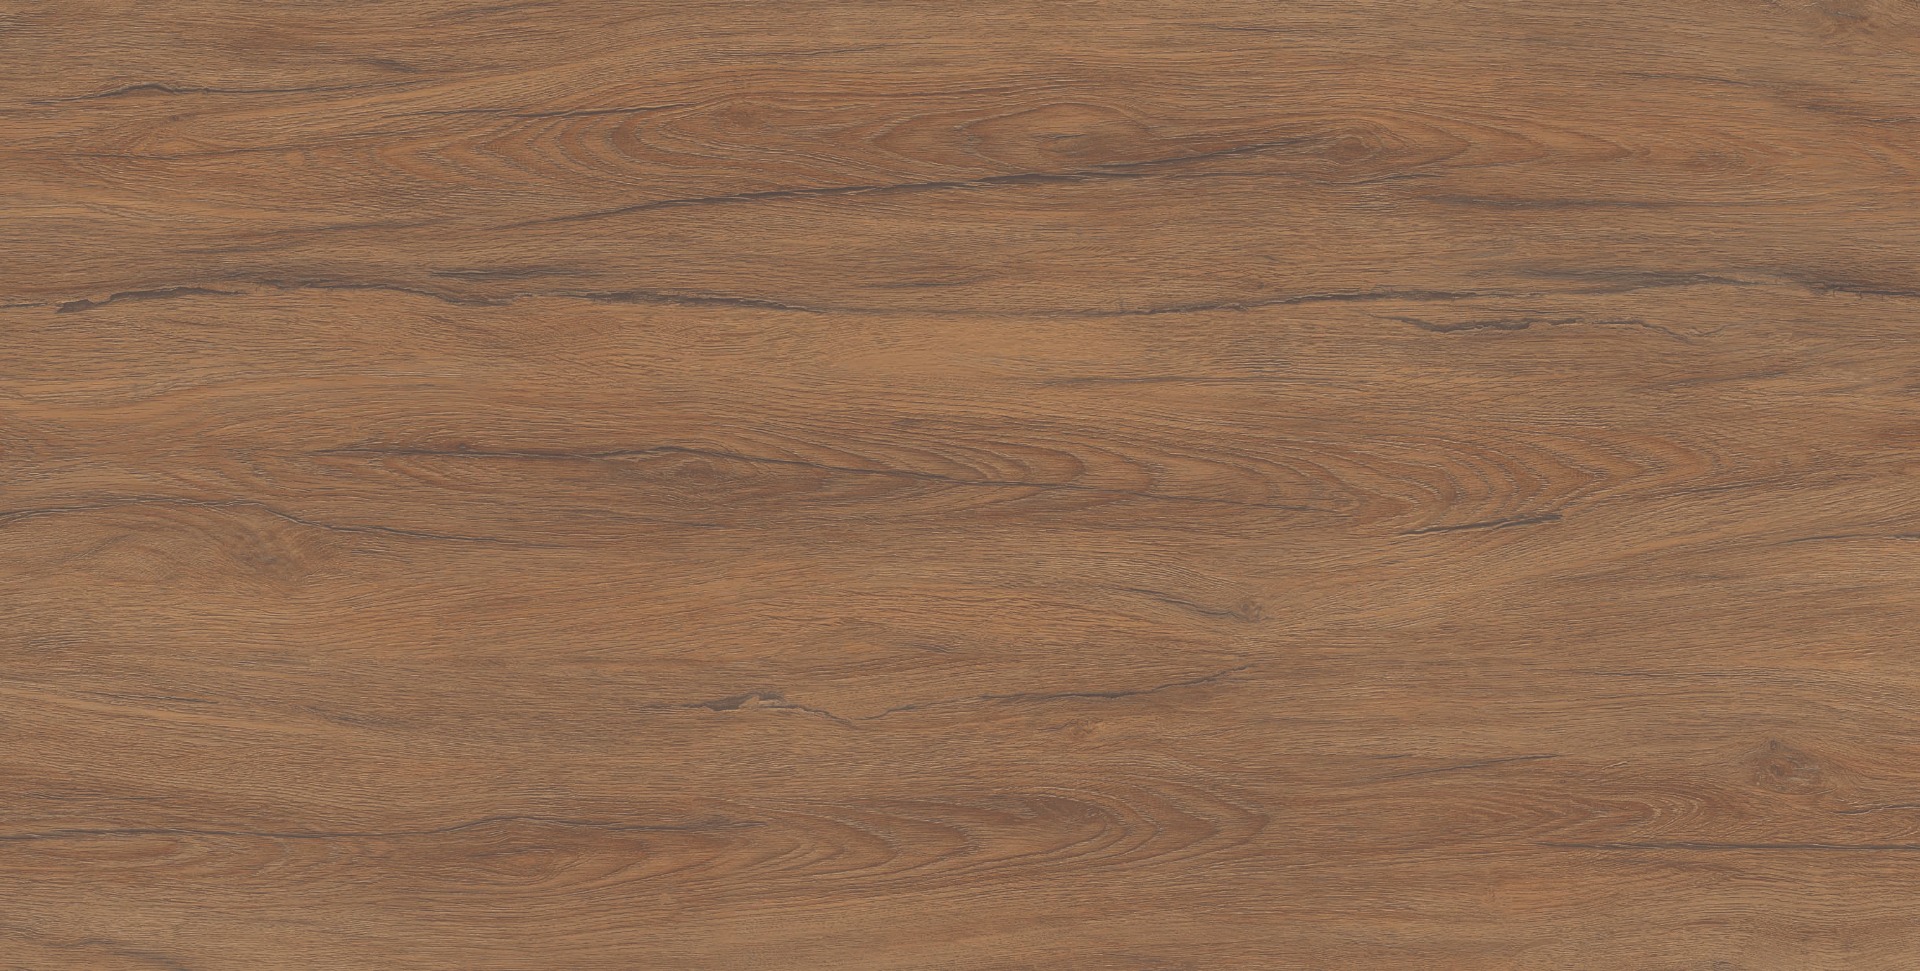 Buy DR Carving Oak Hardwood Brown Floor Tiles Online | Orientbell Tiles